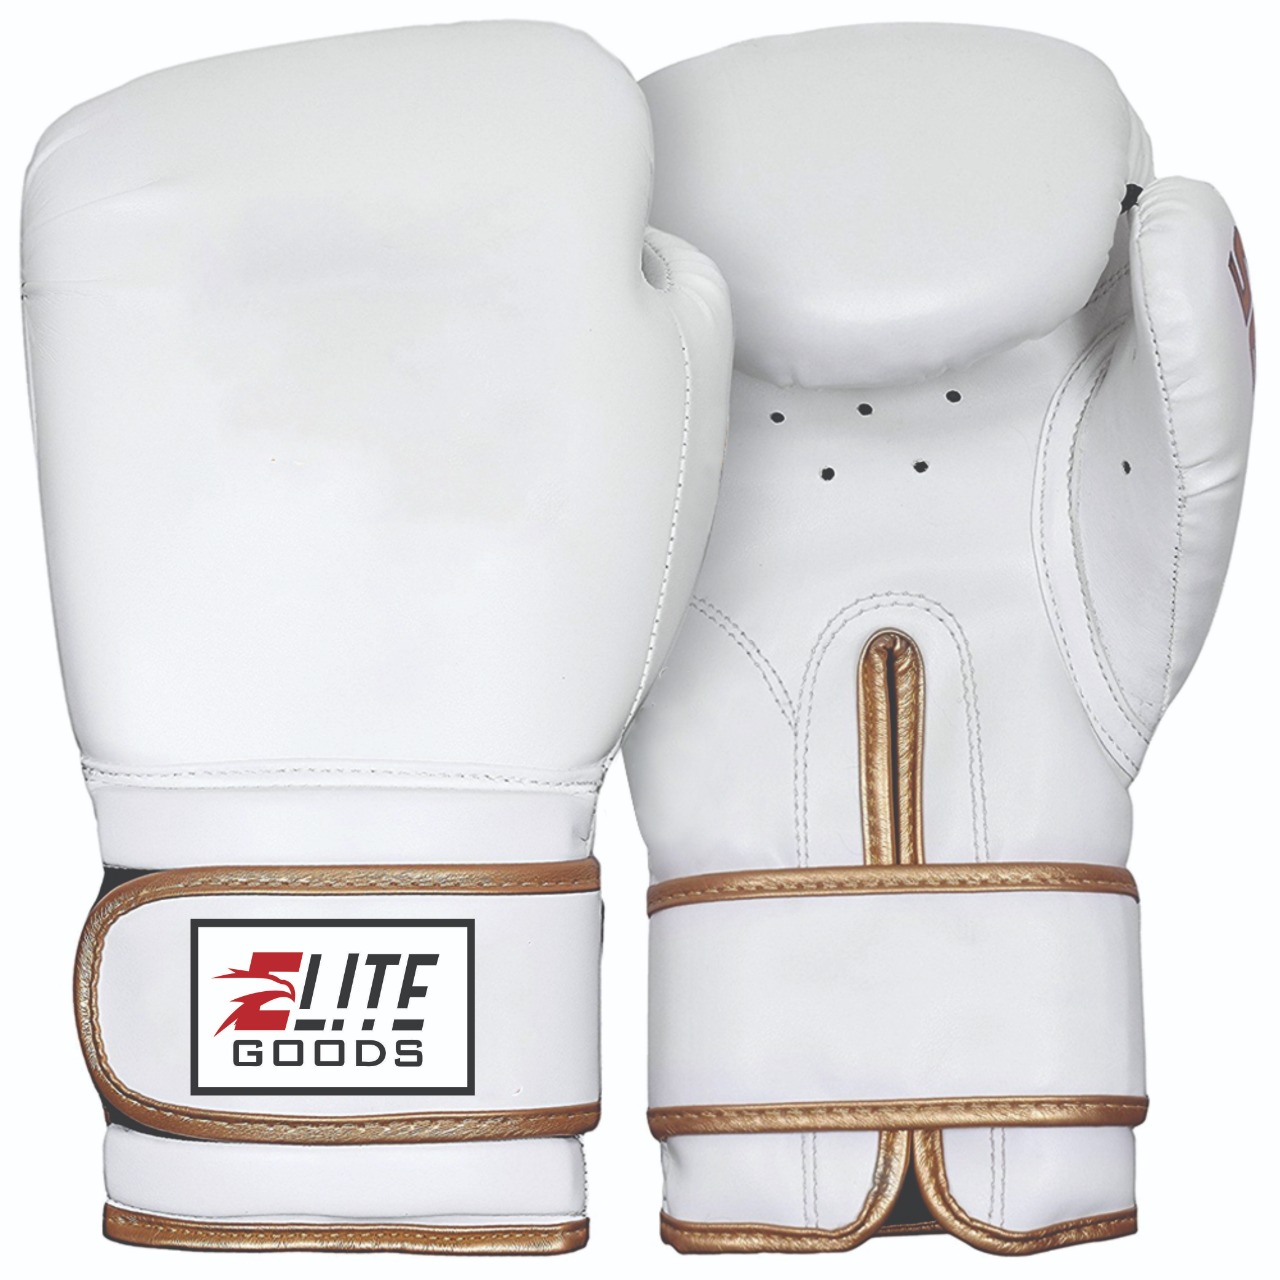 EliteGoods Wholesale boxing Gloves